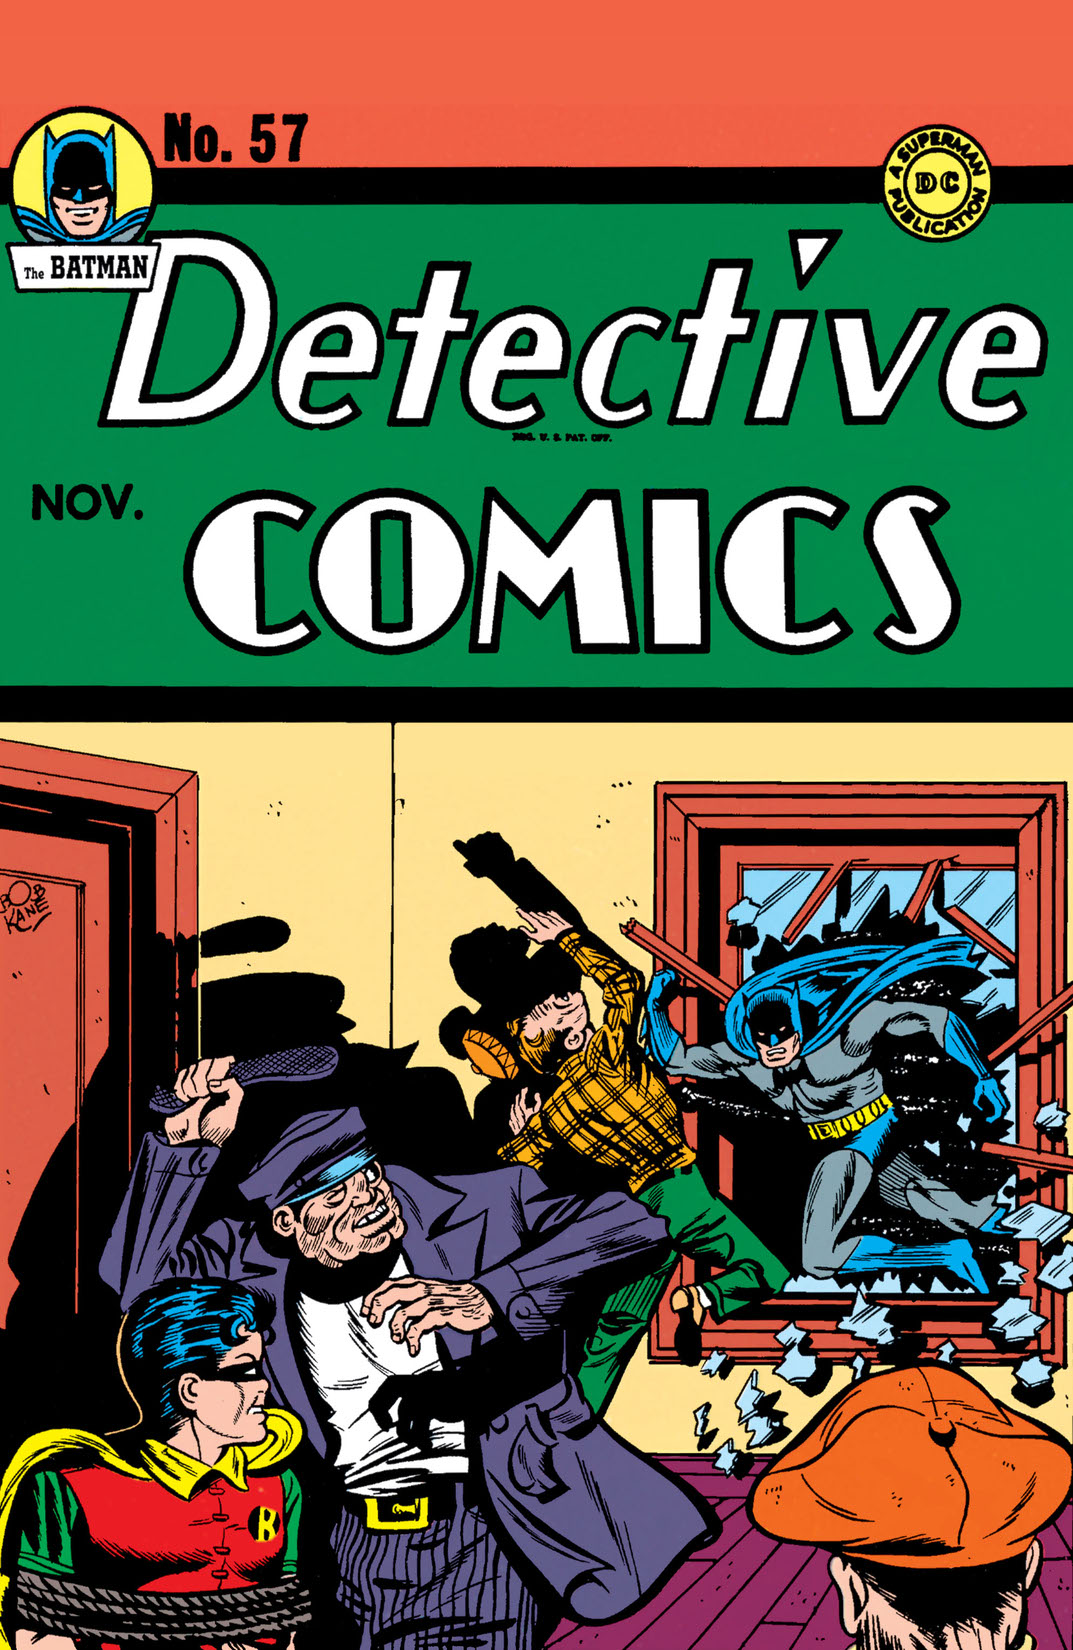 Detective Comics (1937-) #57 preview images